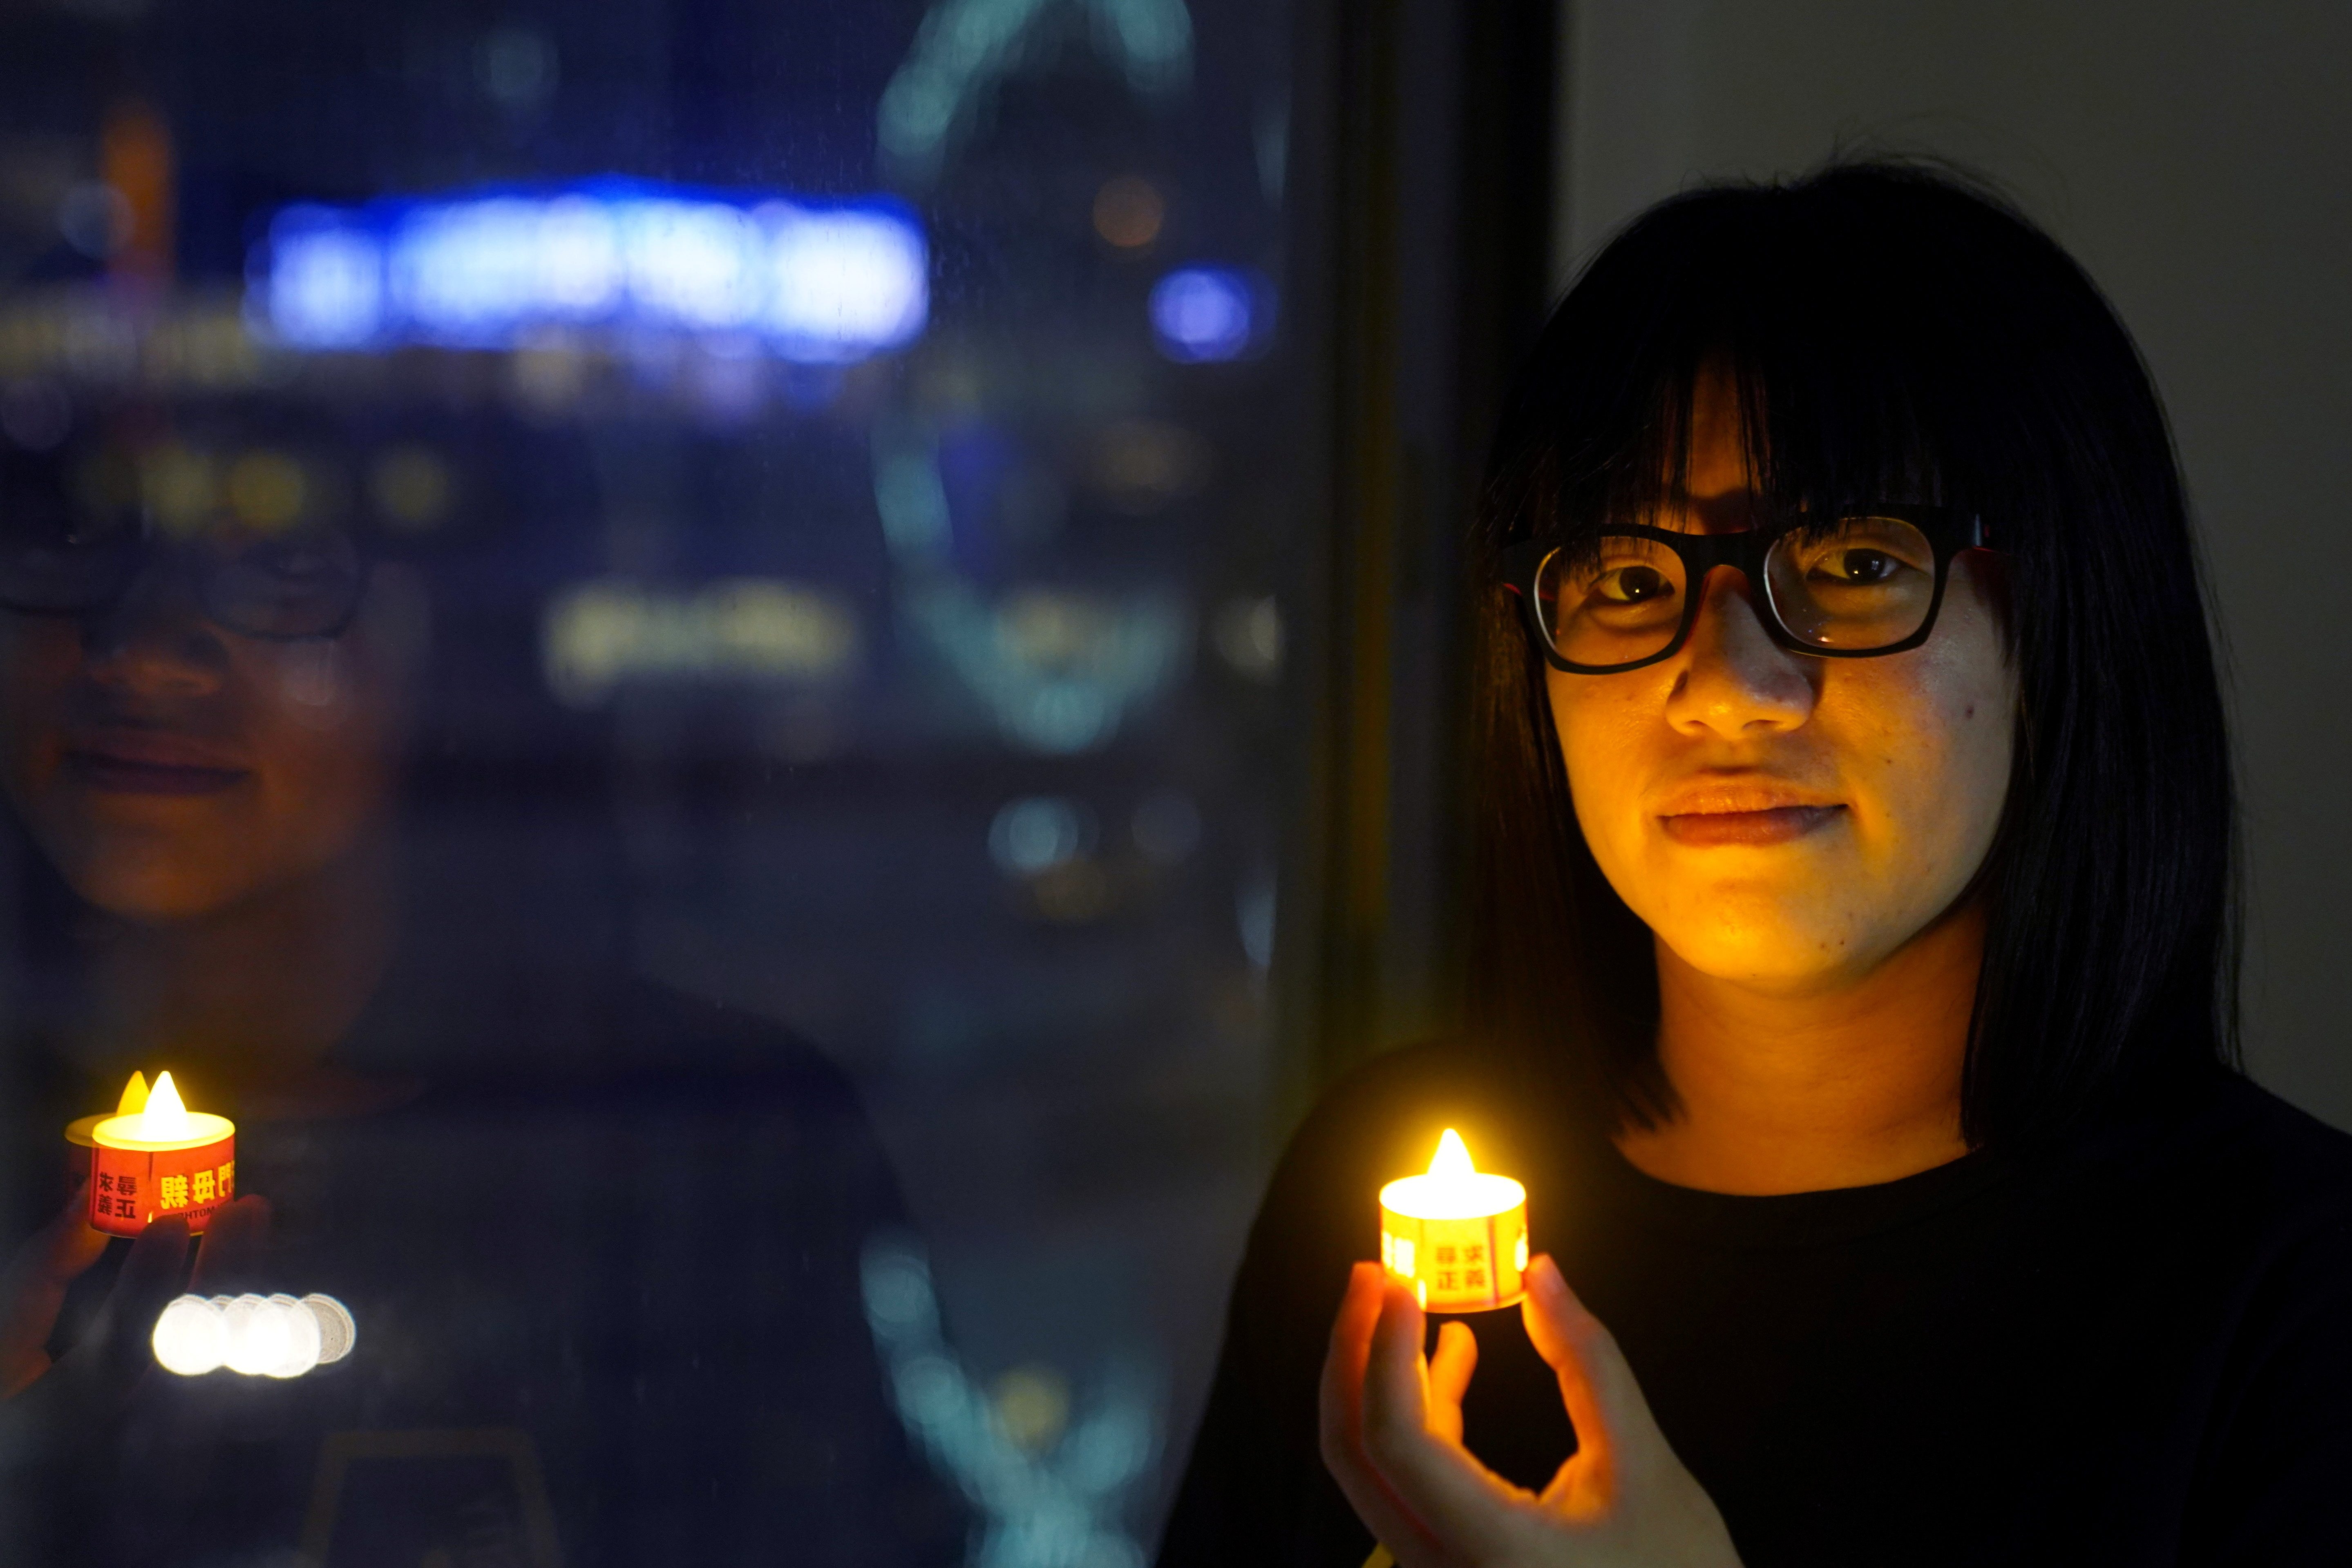 Hong Kong democracy activist rearrested on eve of sensitive anniversaries